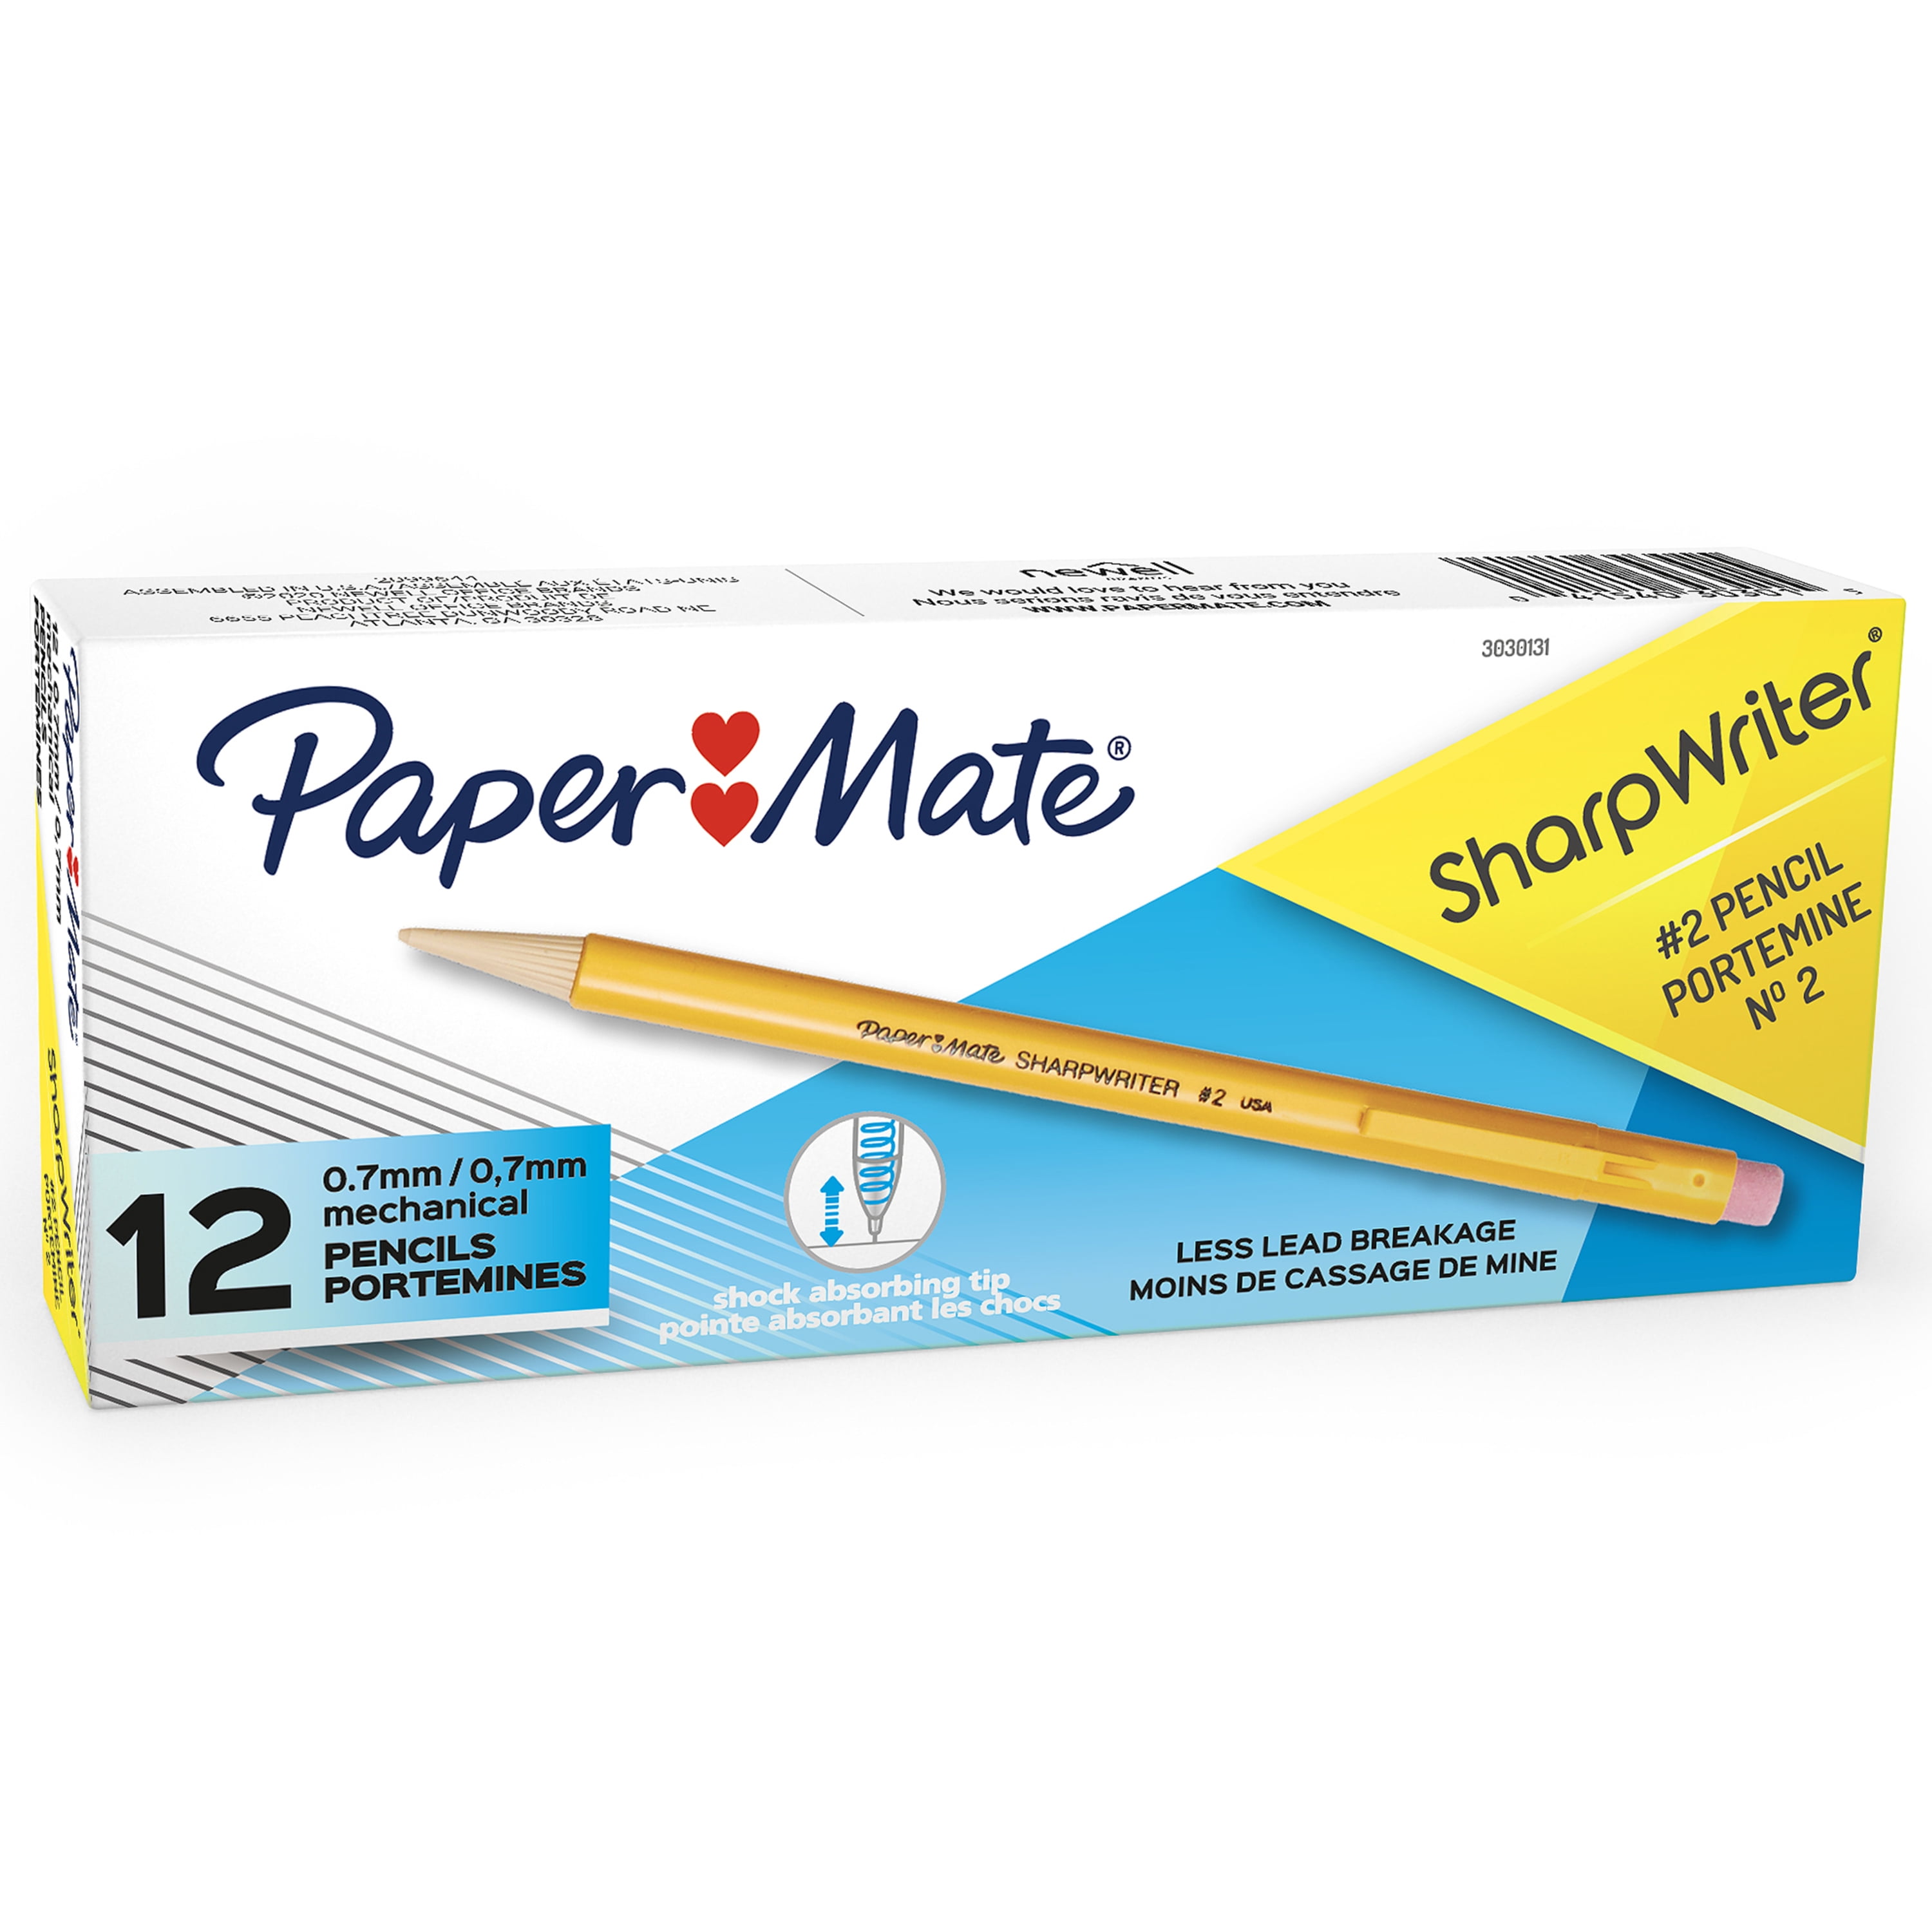 Pair of Paper Mate Sharpwriter 0.7mm Mechanical Yellow Pencils 